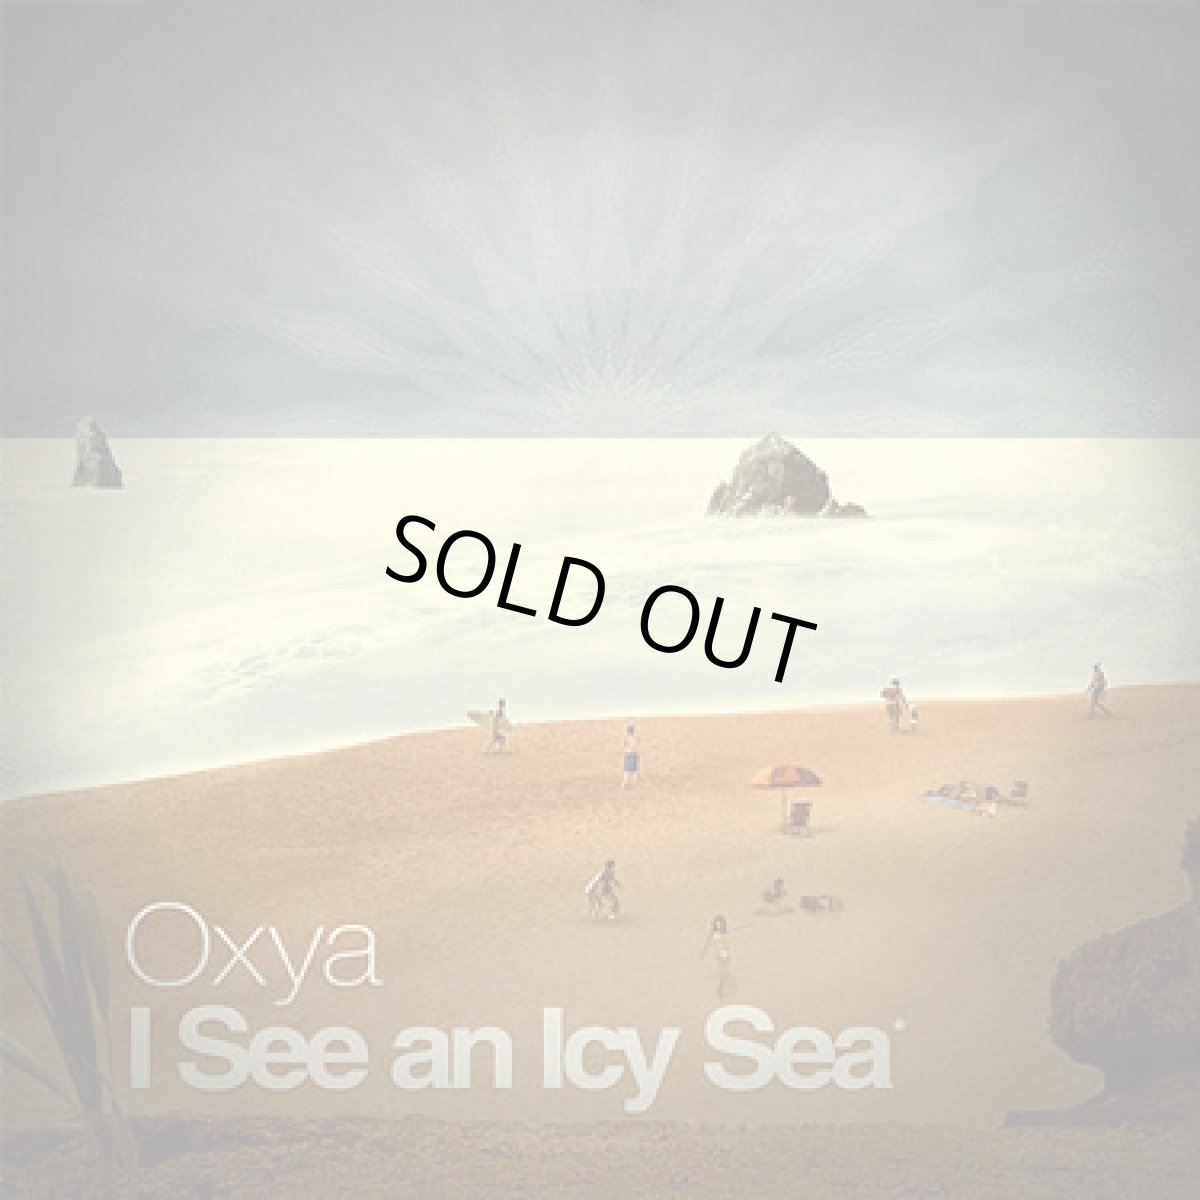 画像1: CD「Oxya / I See An Icy Sea」 (1)